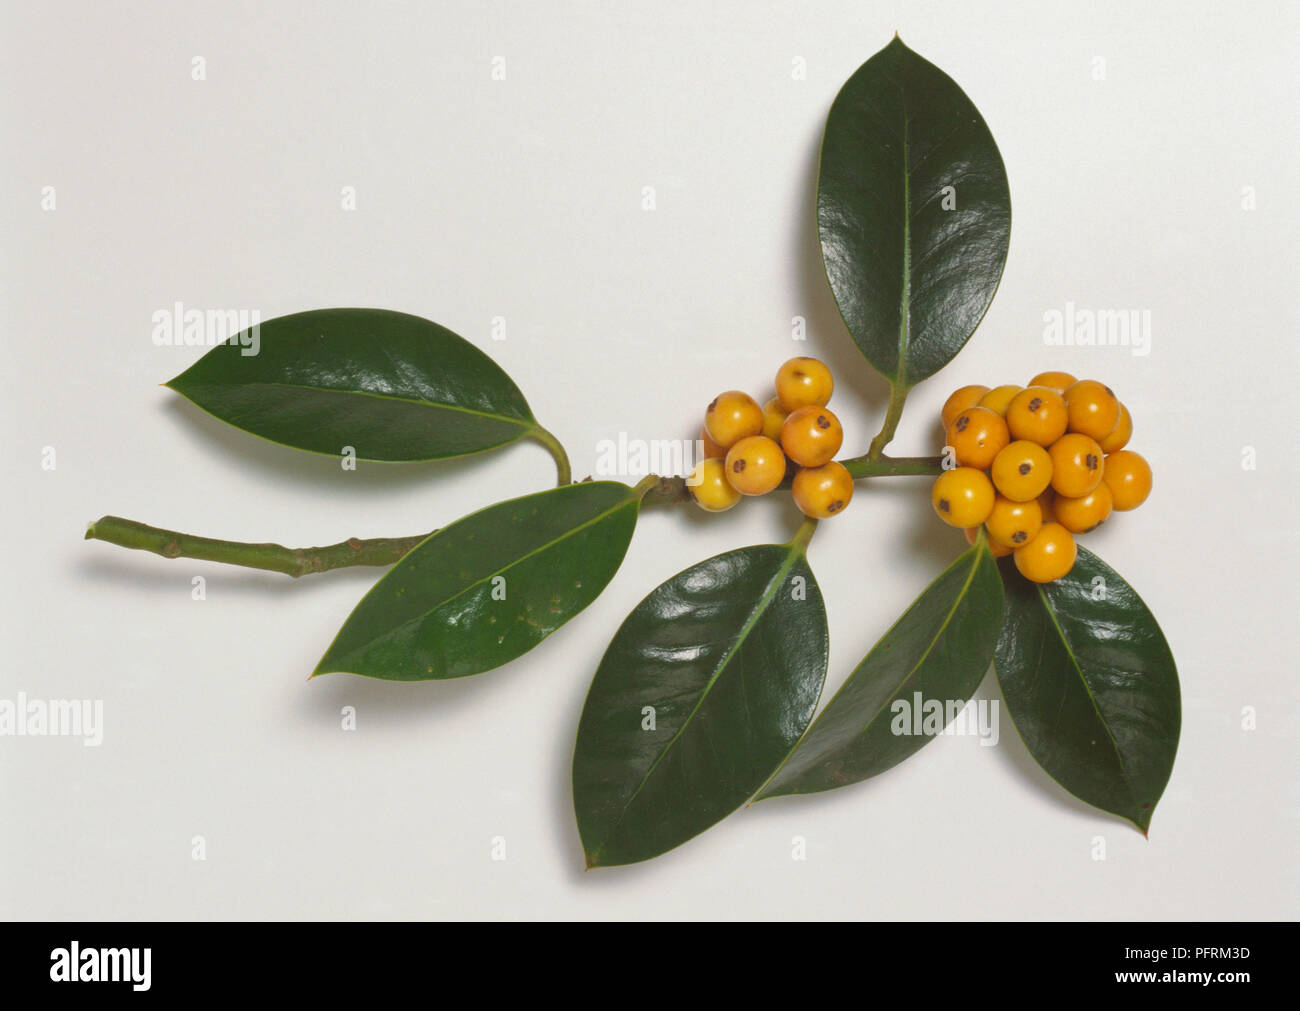 Ilex aquifolium 'Pyramidalis Fructu Luteo' (Holly), stem with green leaves and yellow berries Stock Photo